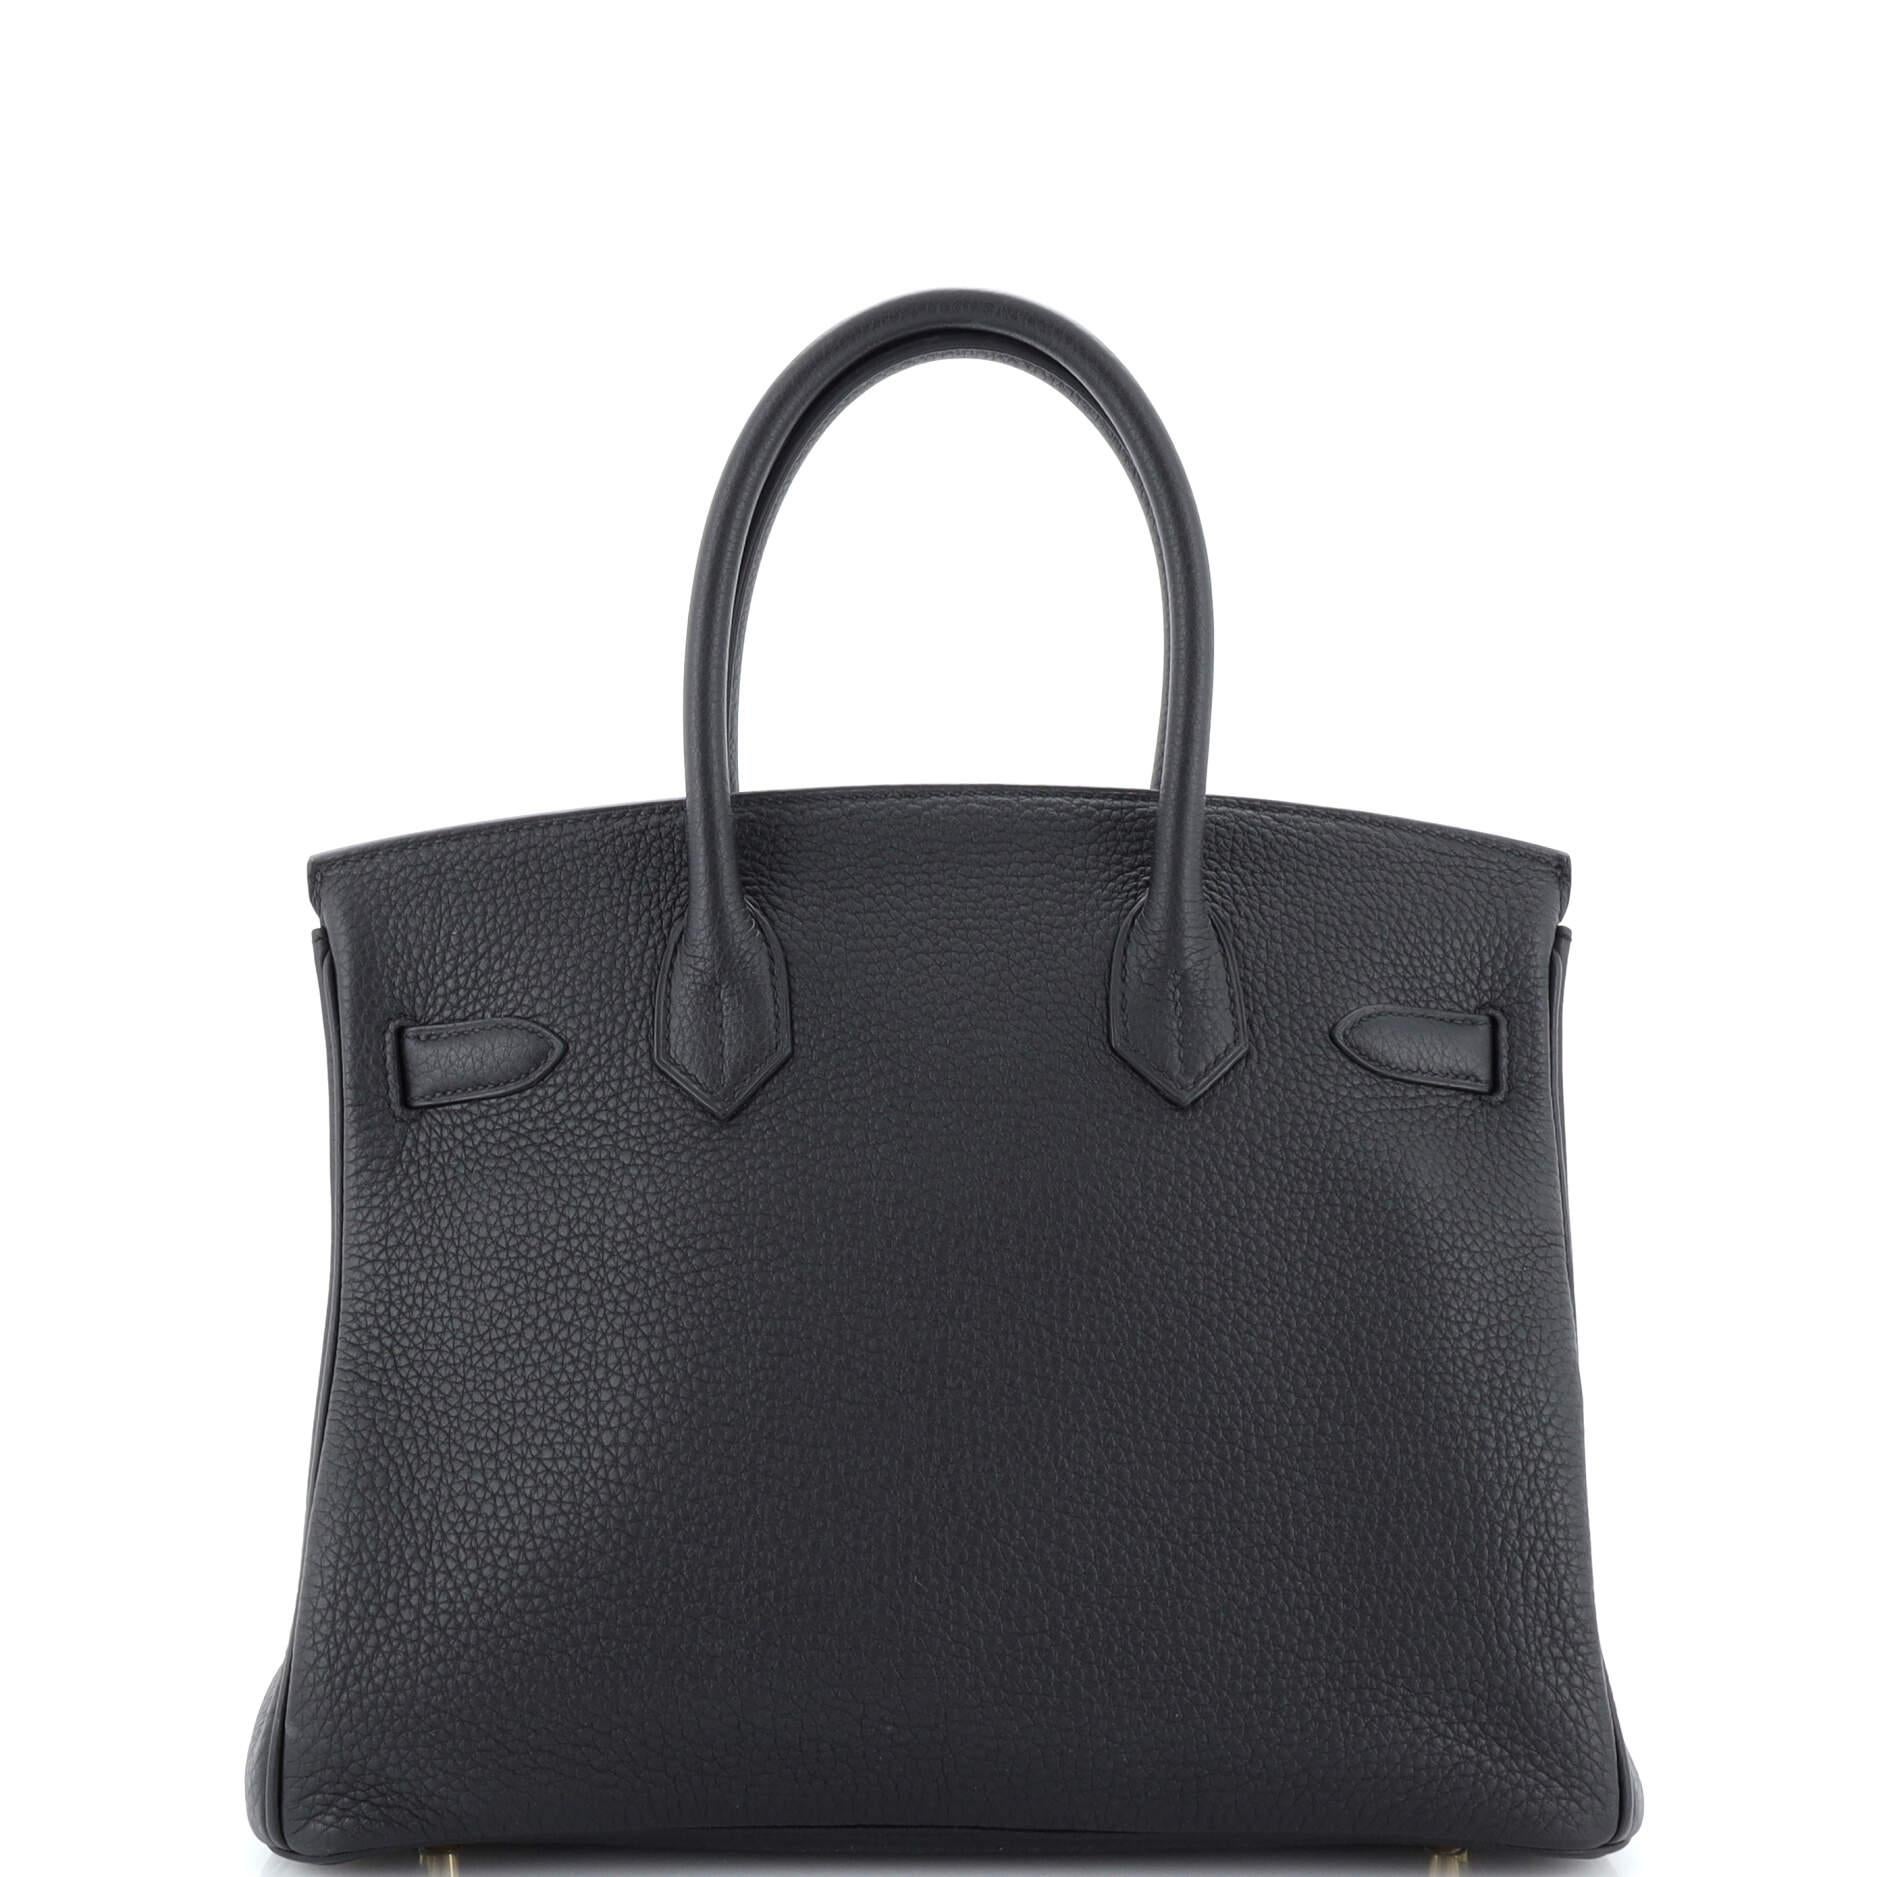 Women's or Men's Hermes Birkin Handbag Noir Togo with Gold Hardware 30